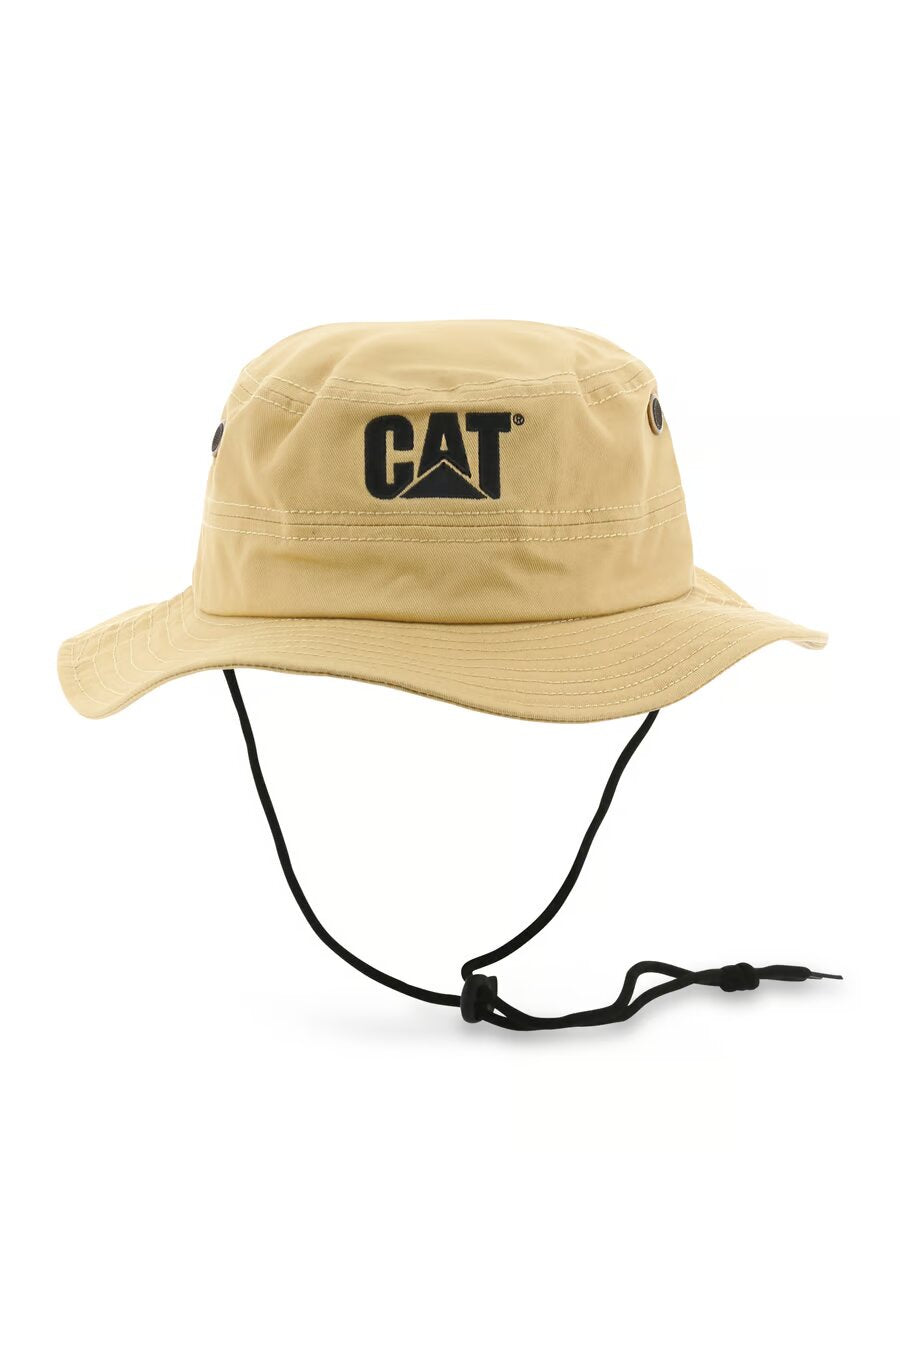 CAT Trademark Safari Hats